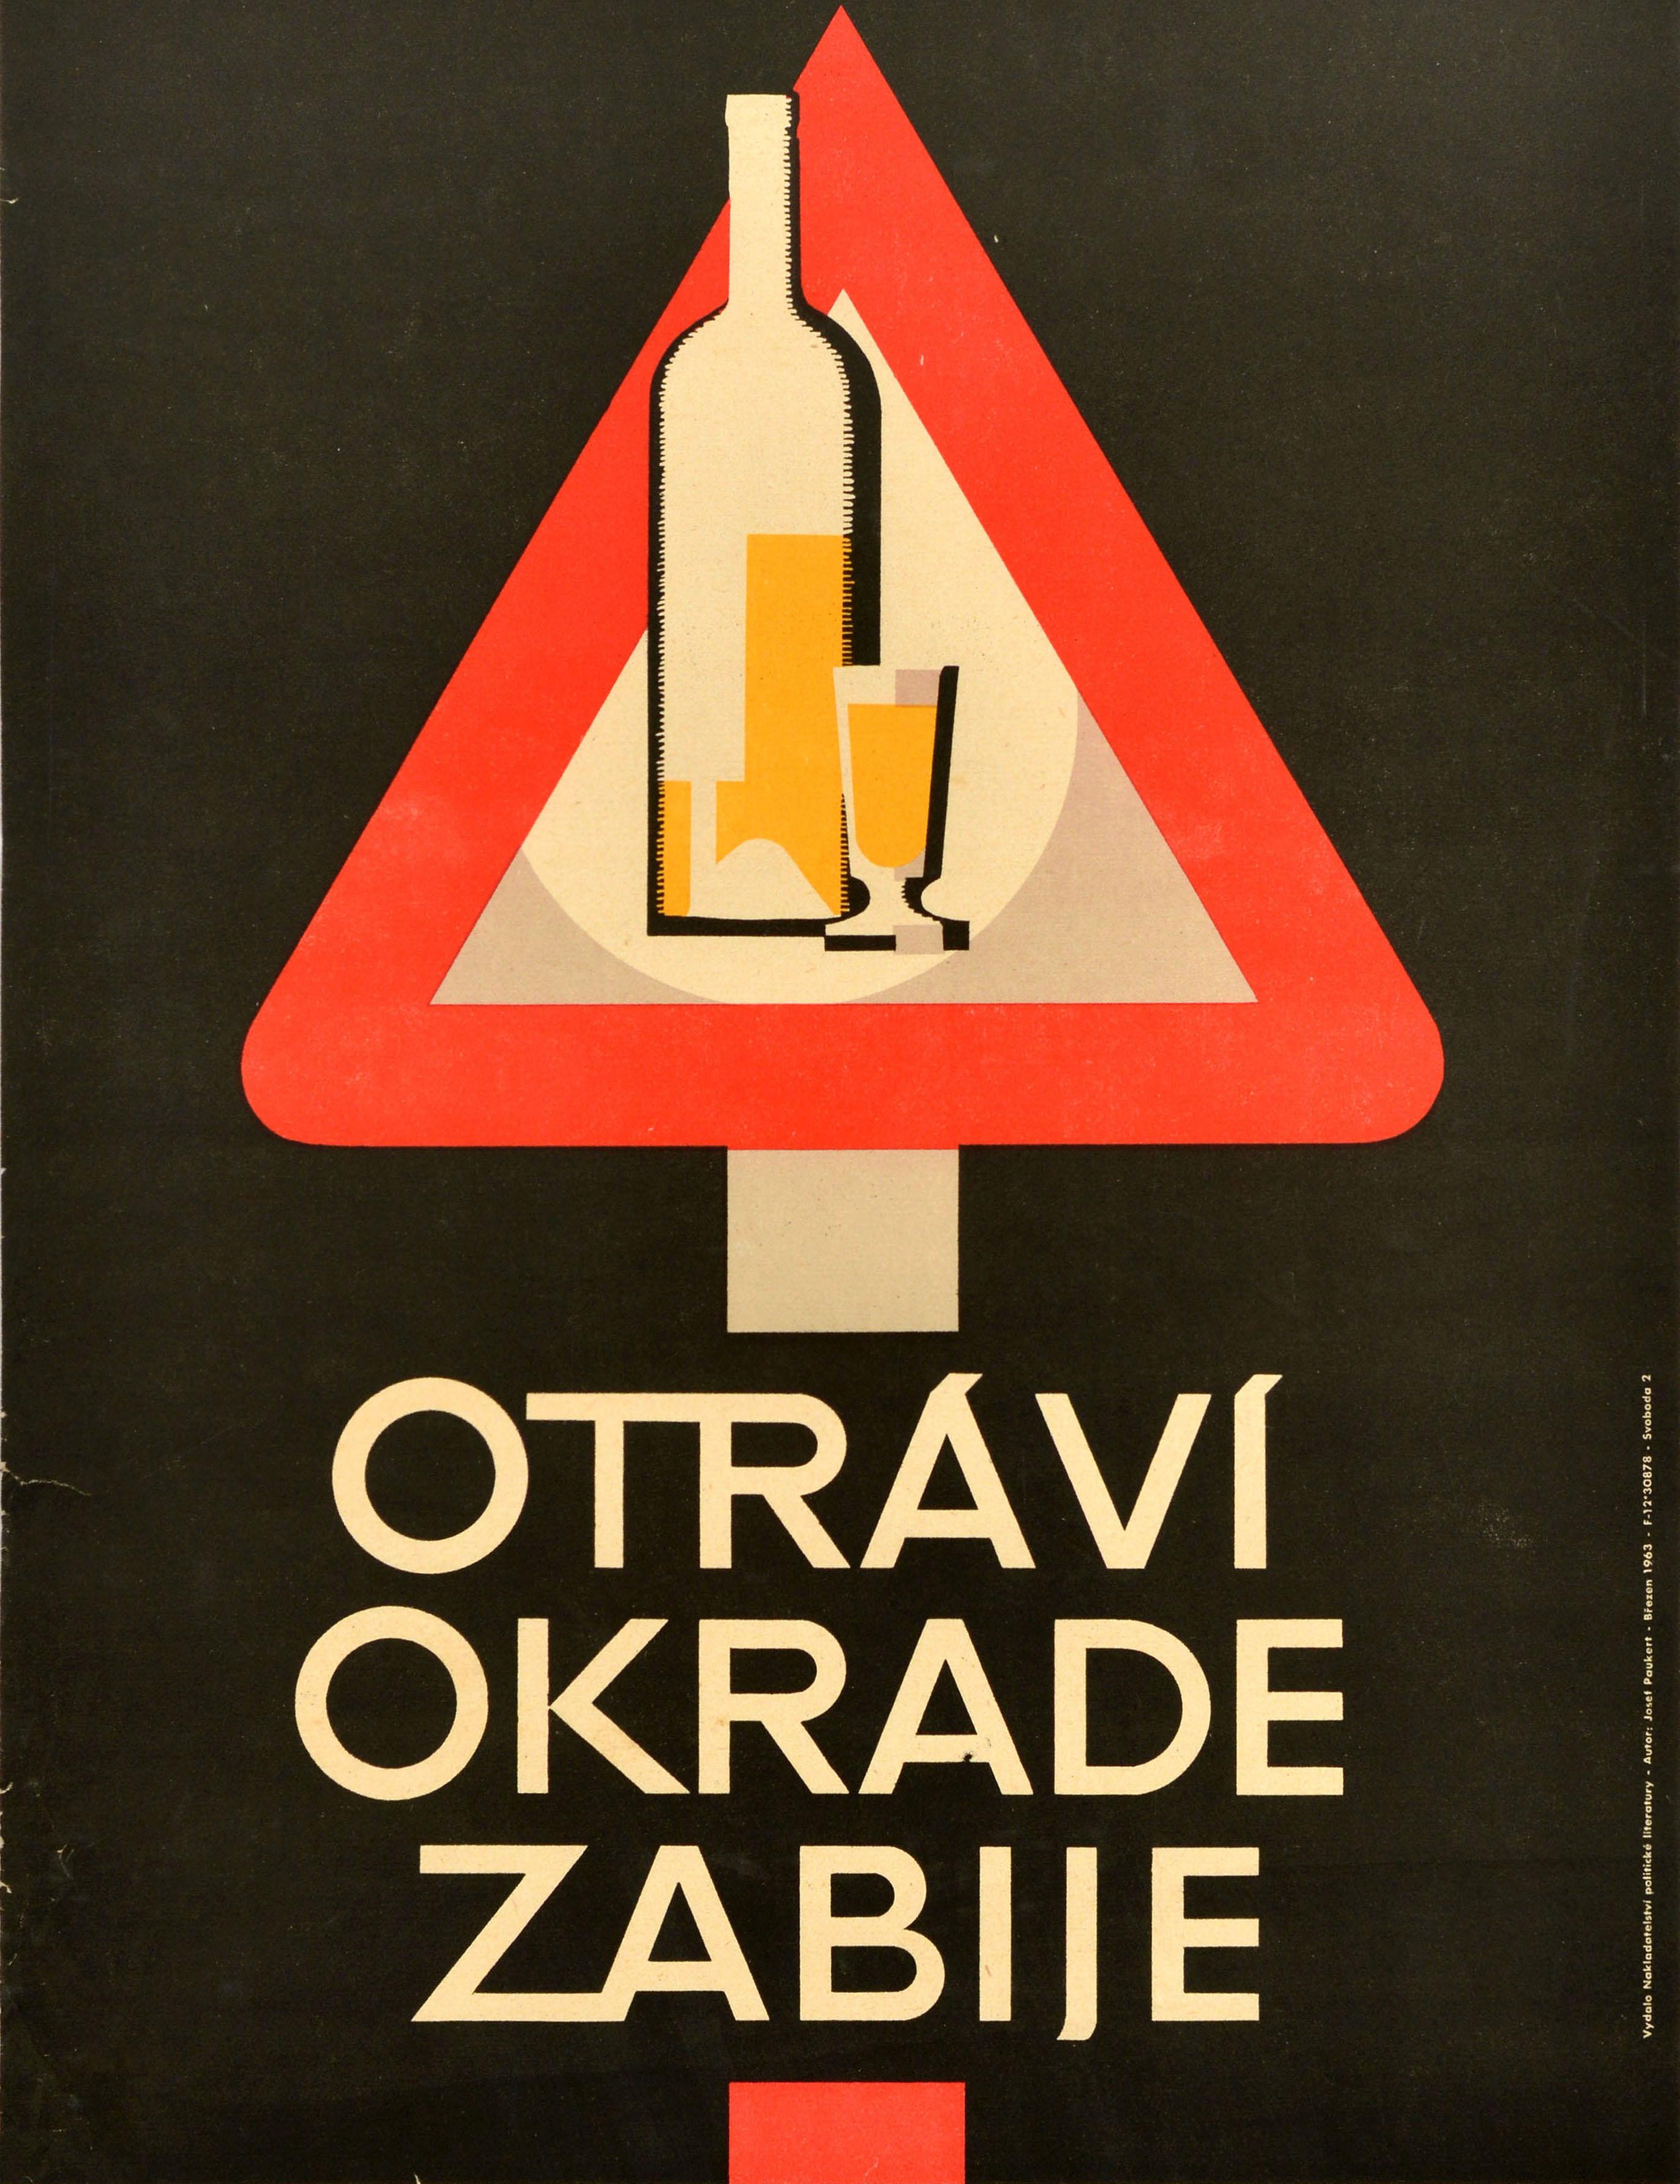 poster jauhi alkohol